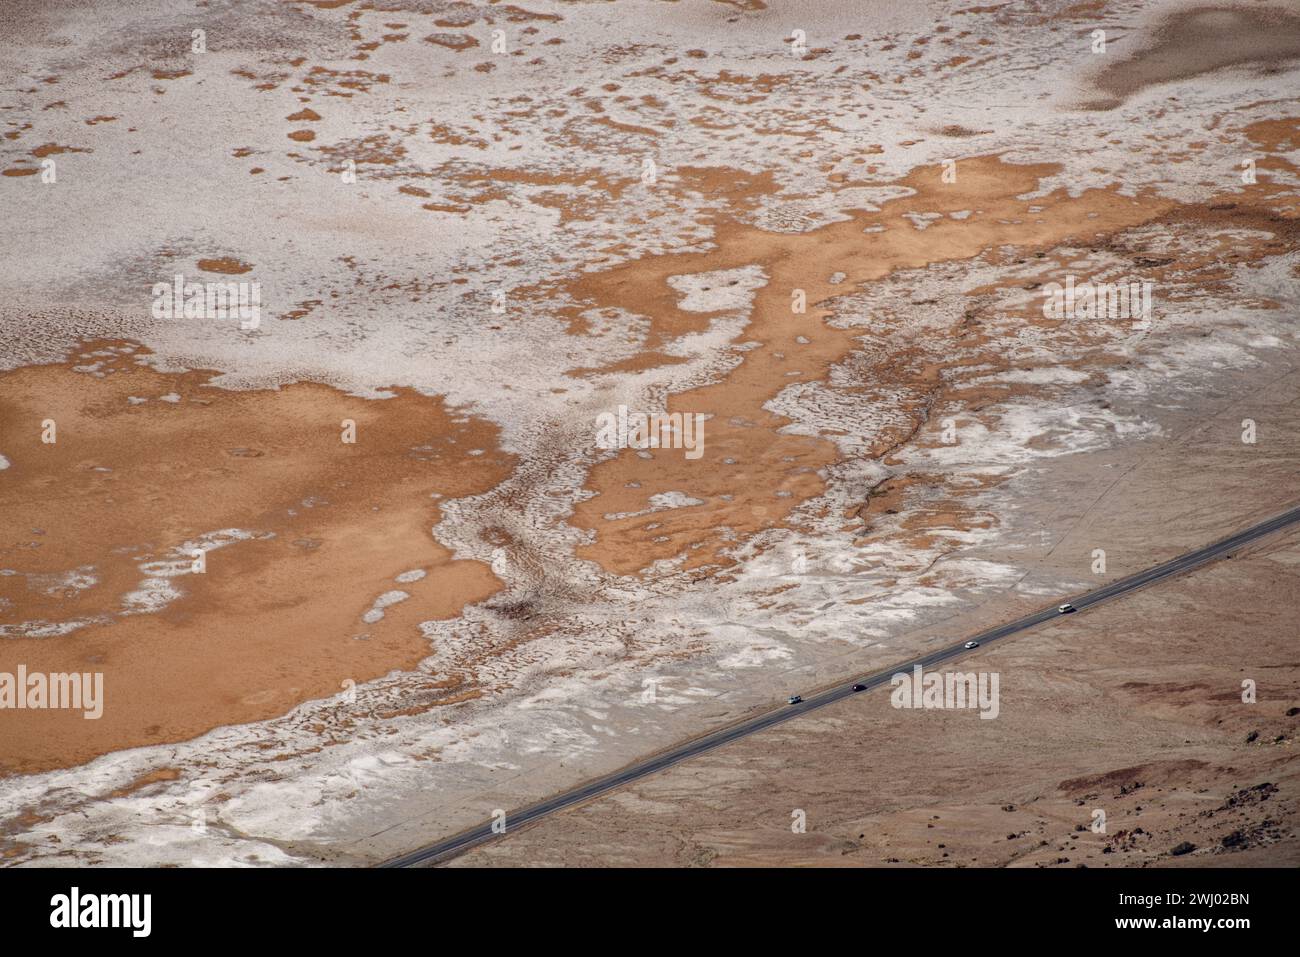 Death Valley, High Elevation, Desert Floor, Geography, Geology, Geologic Features, Salt Flows, Salt Lakes, Extreme Heat, Arid Landscape, Barren Stock Photo